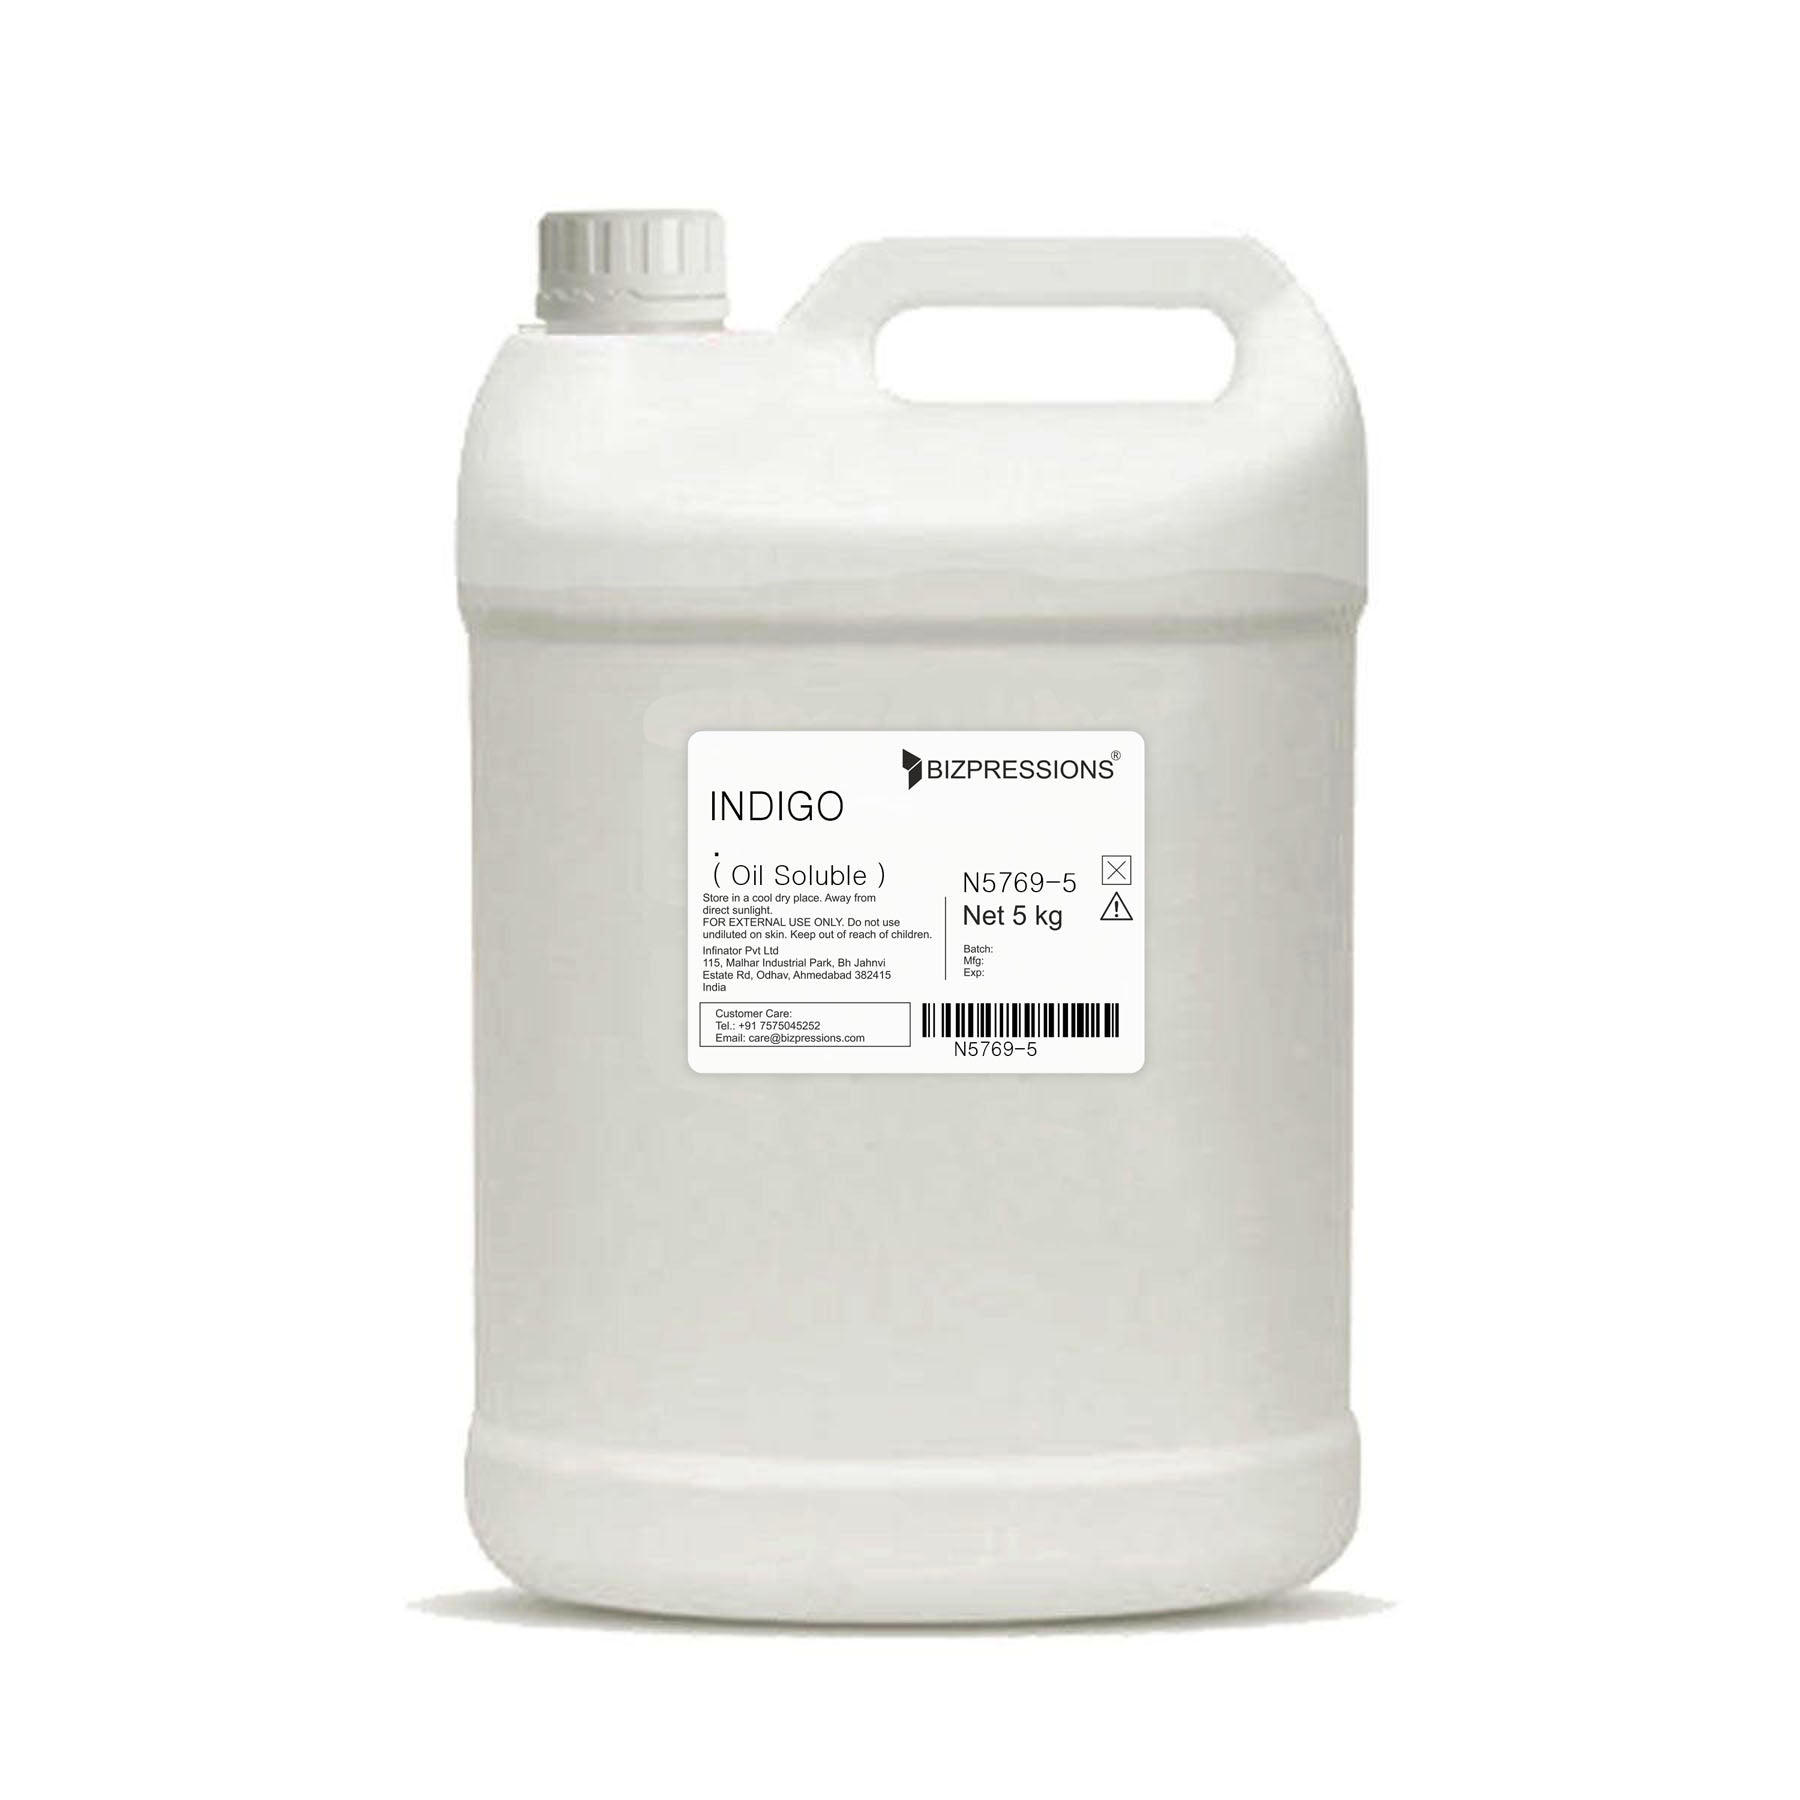 INDIGO - Fragrance ( Oil Soluble ) - 5 kg